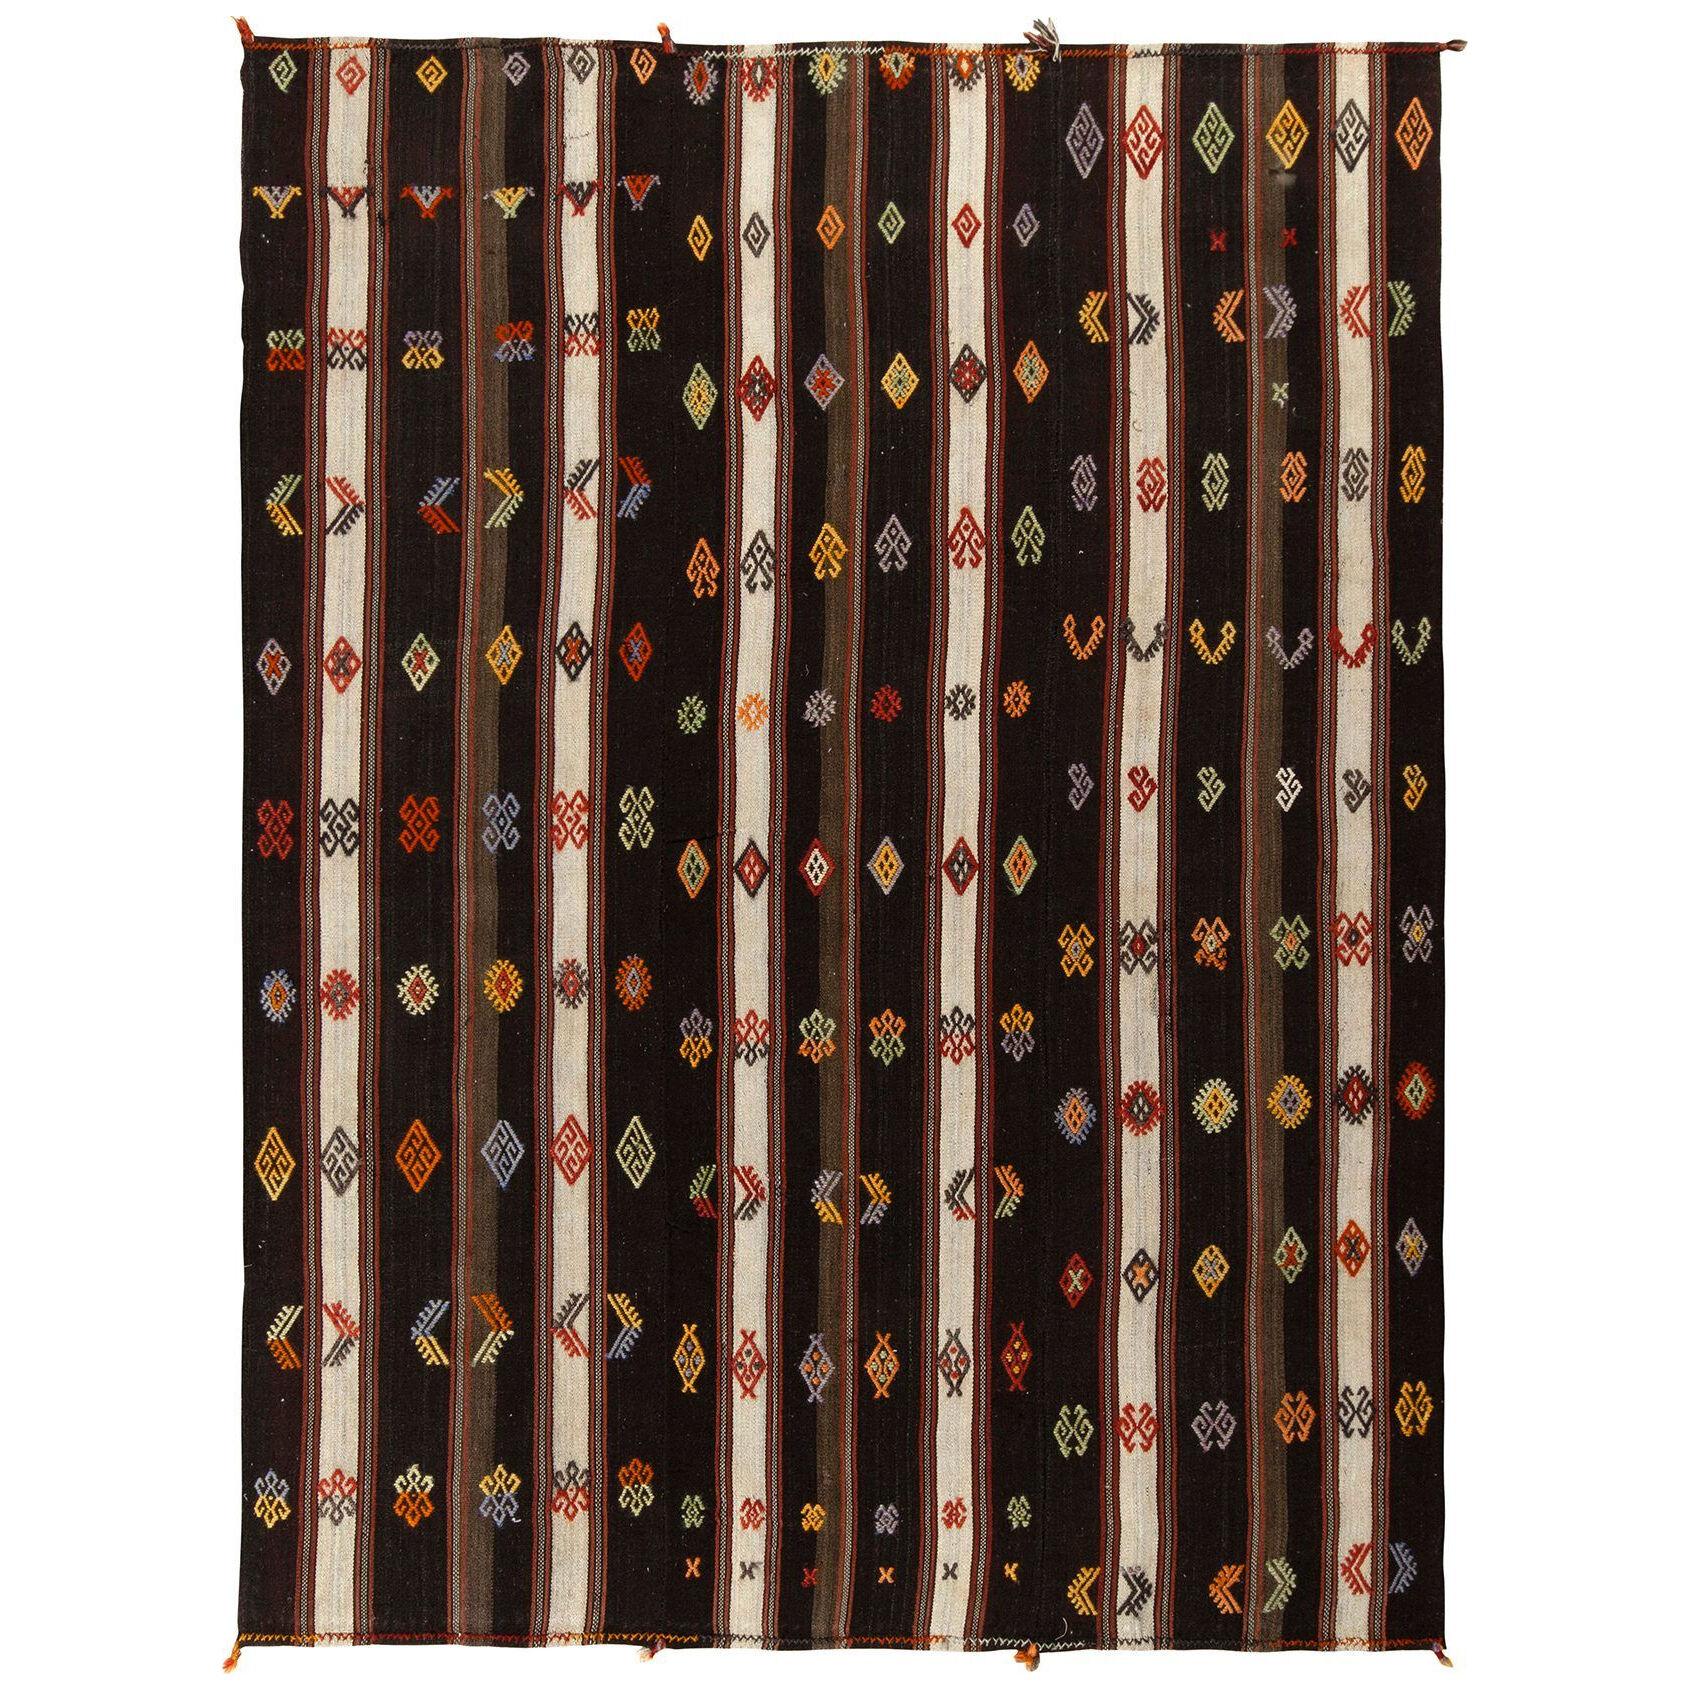 Handwoven Vintage Turkish Kilim Rug, Beige-Brown Stripes, Multicolor Embroidery